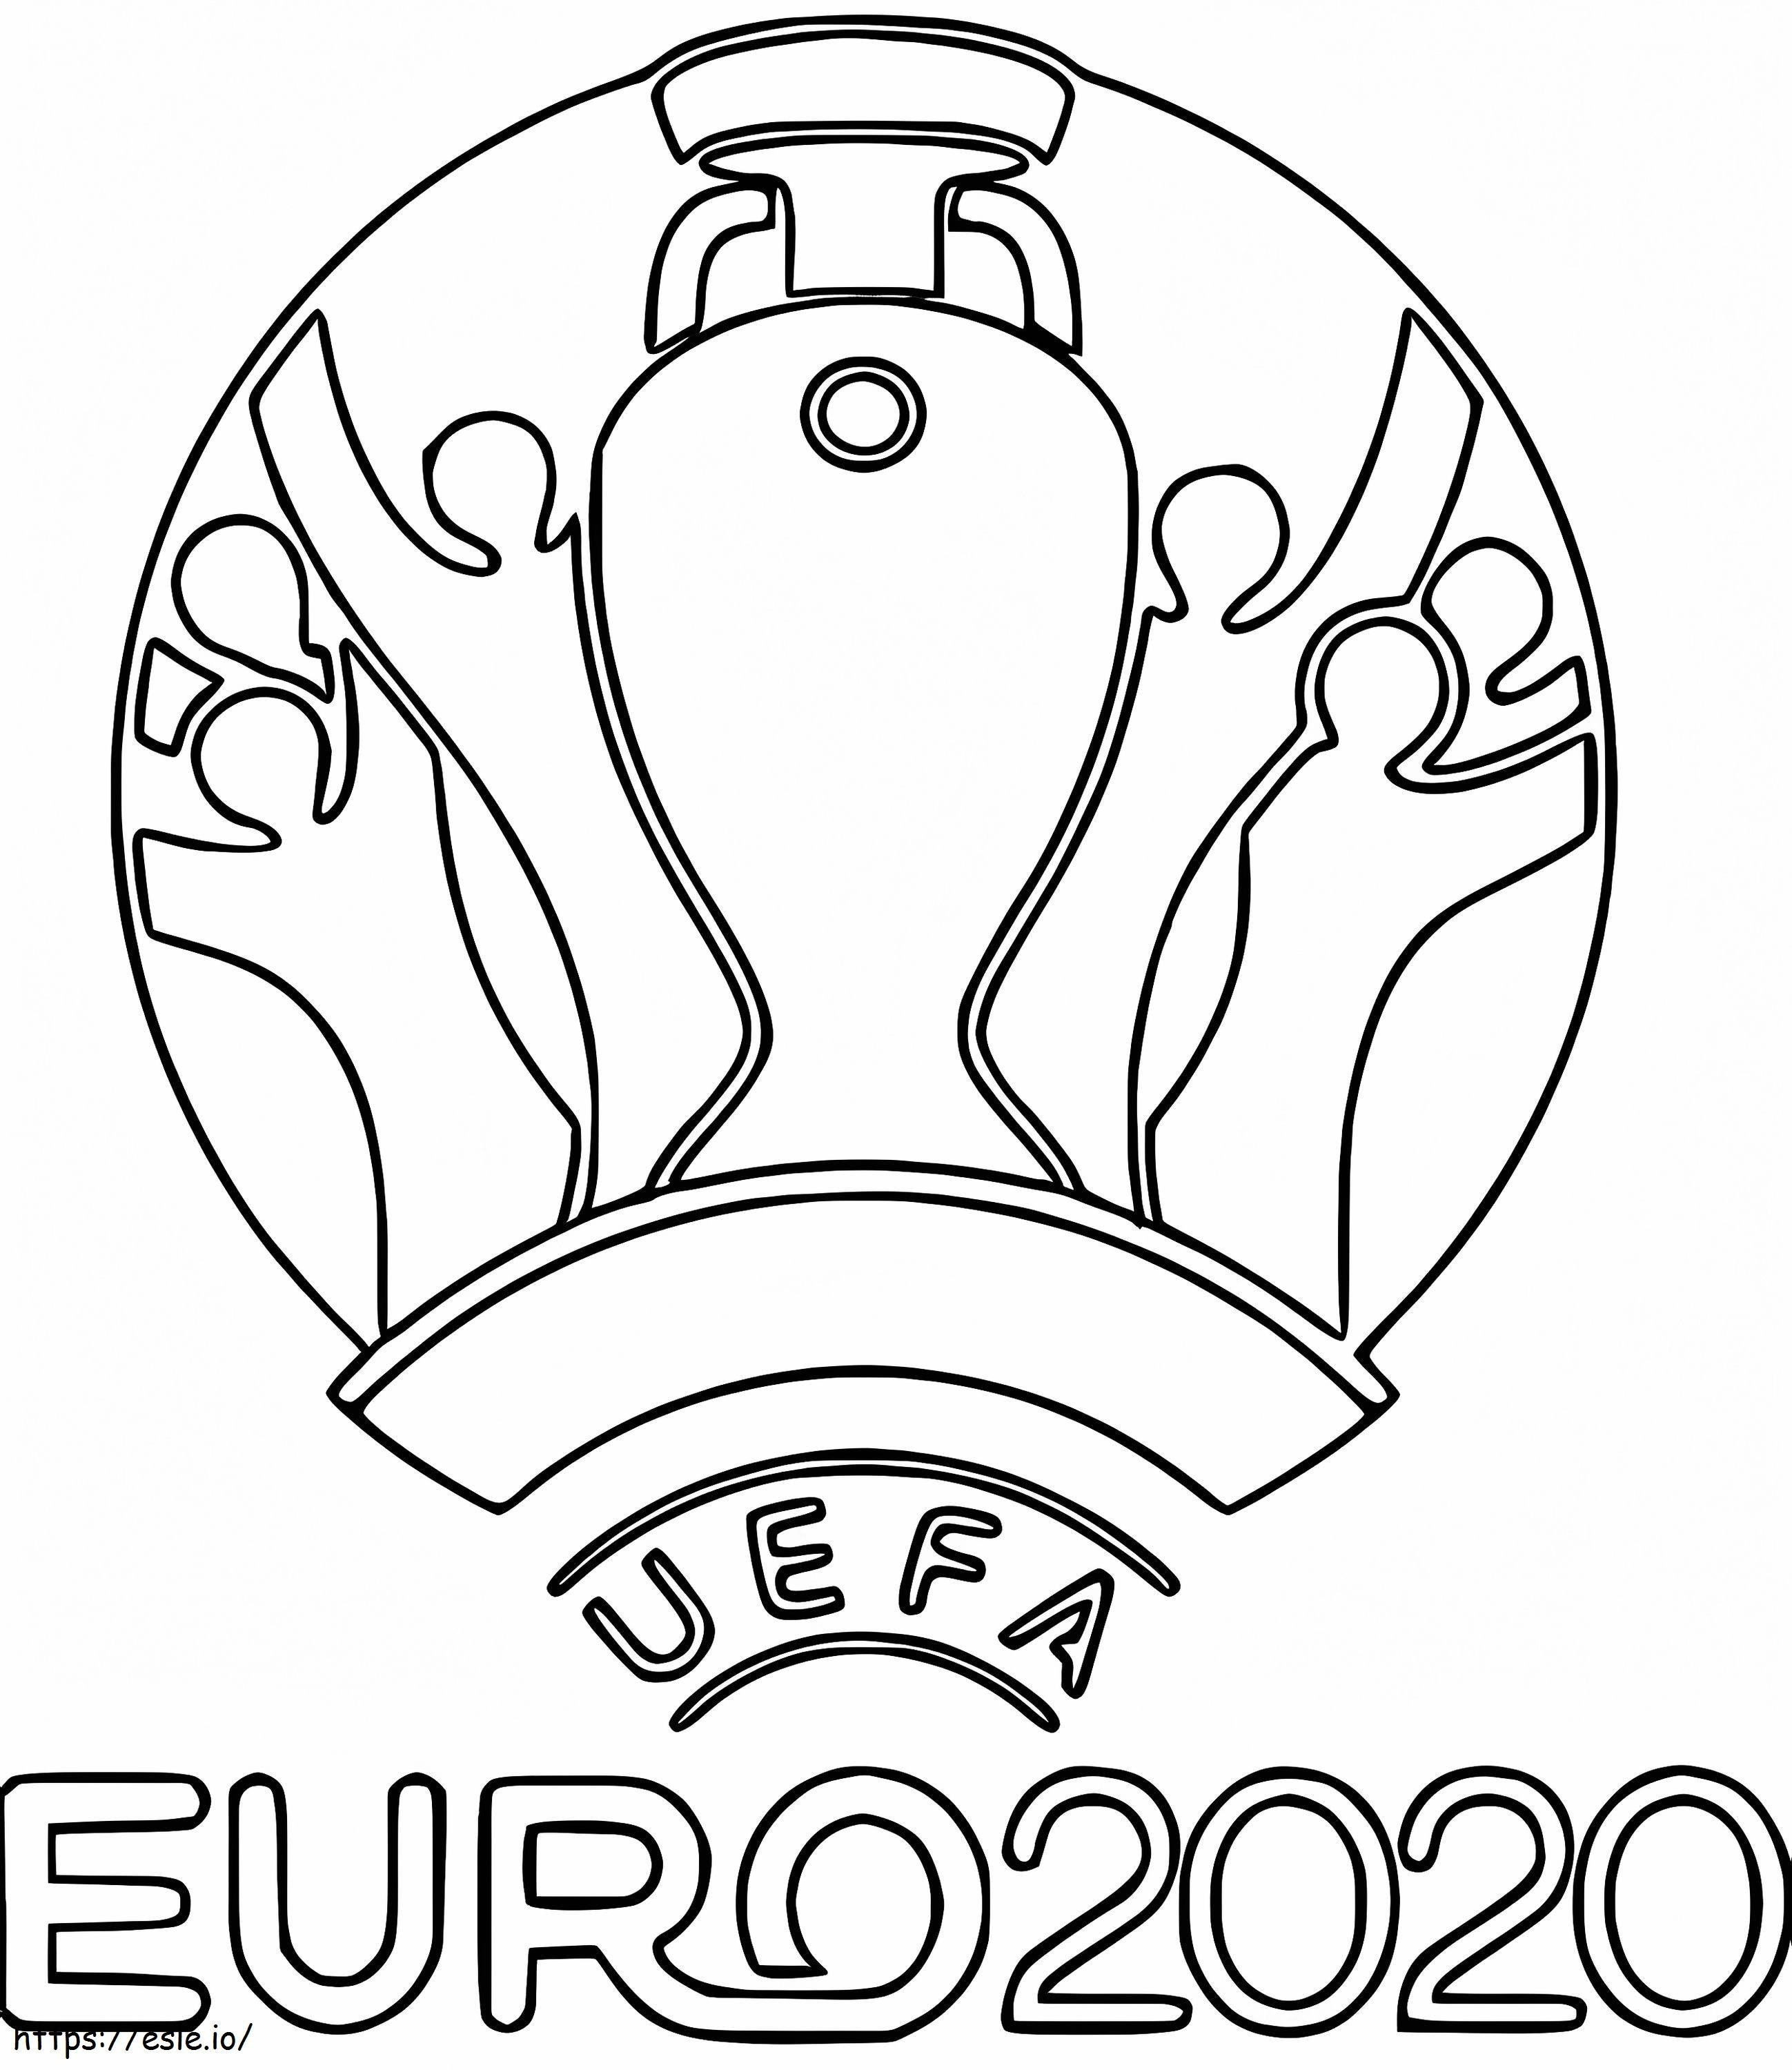 Euro 2020 2021 kifestő